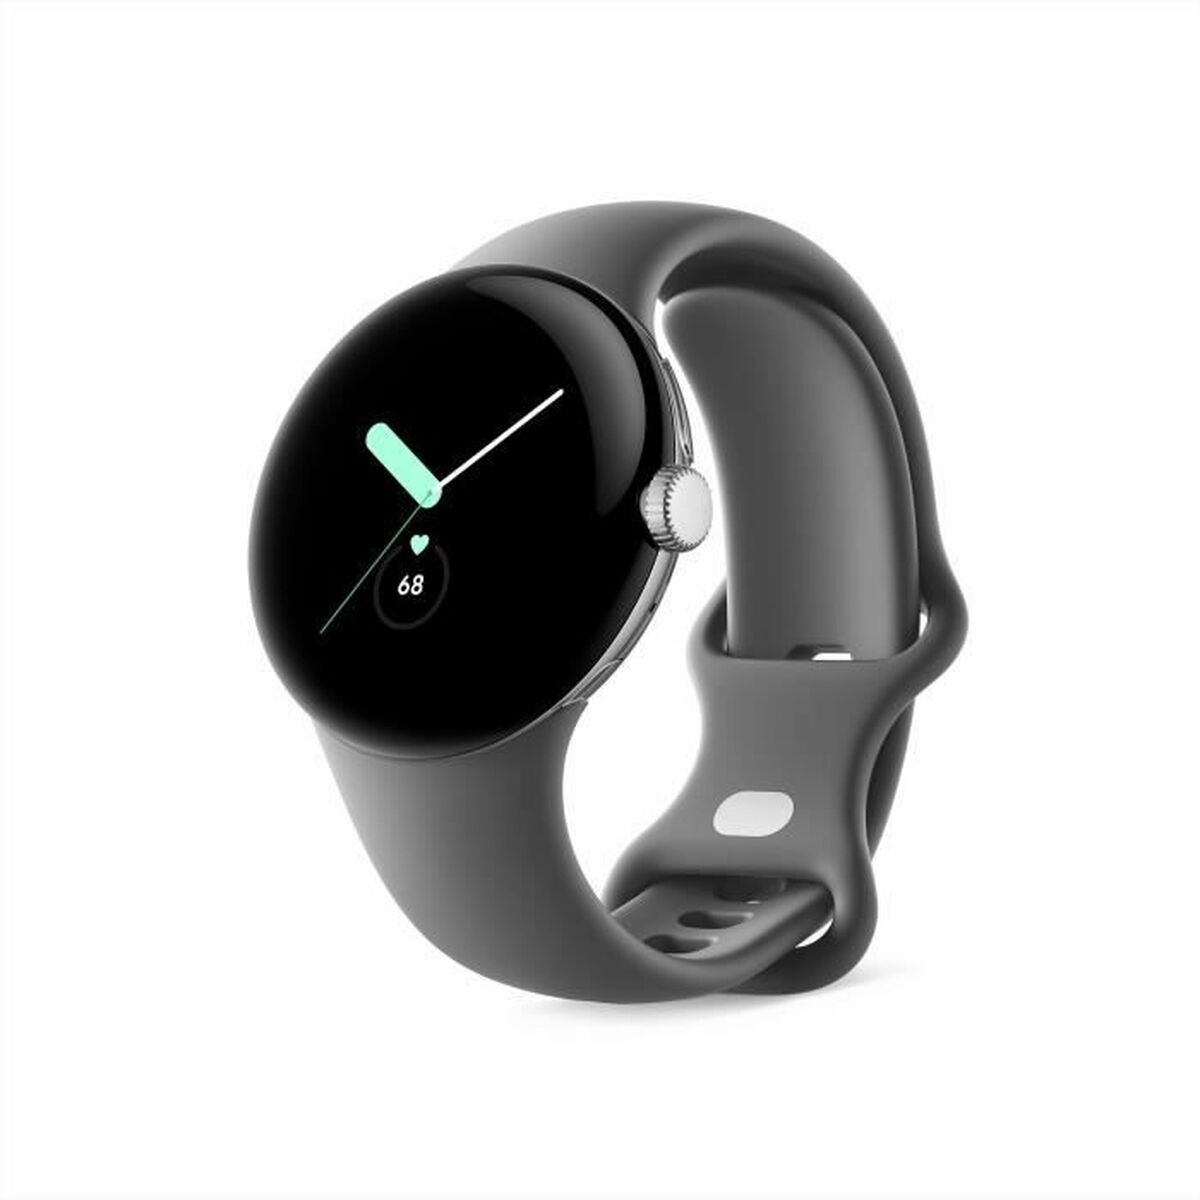 Smartwatch Google Pixel Watch